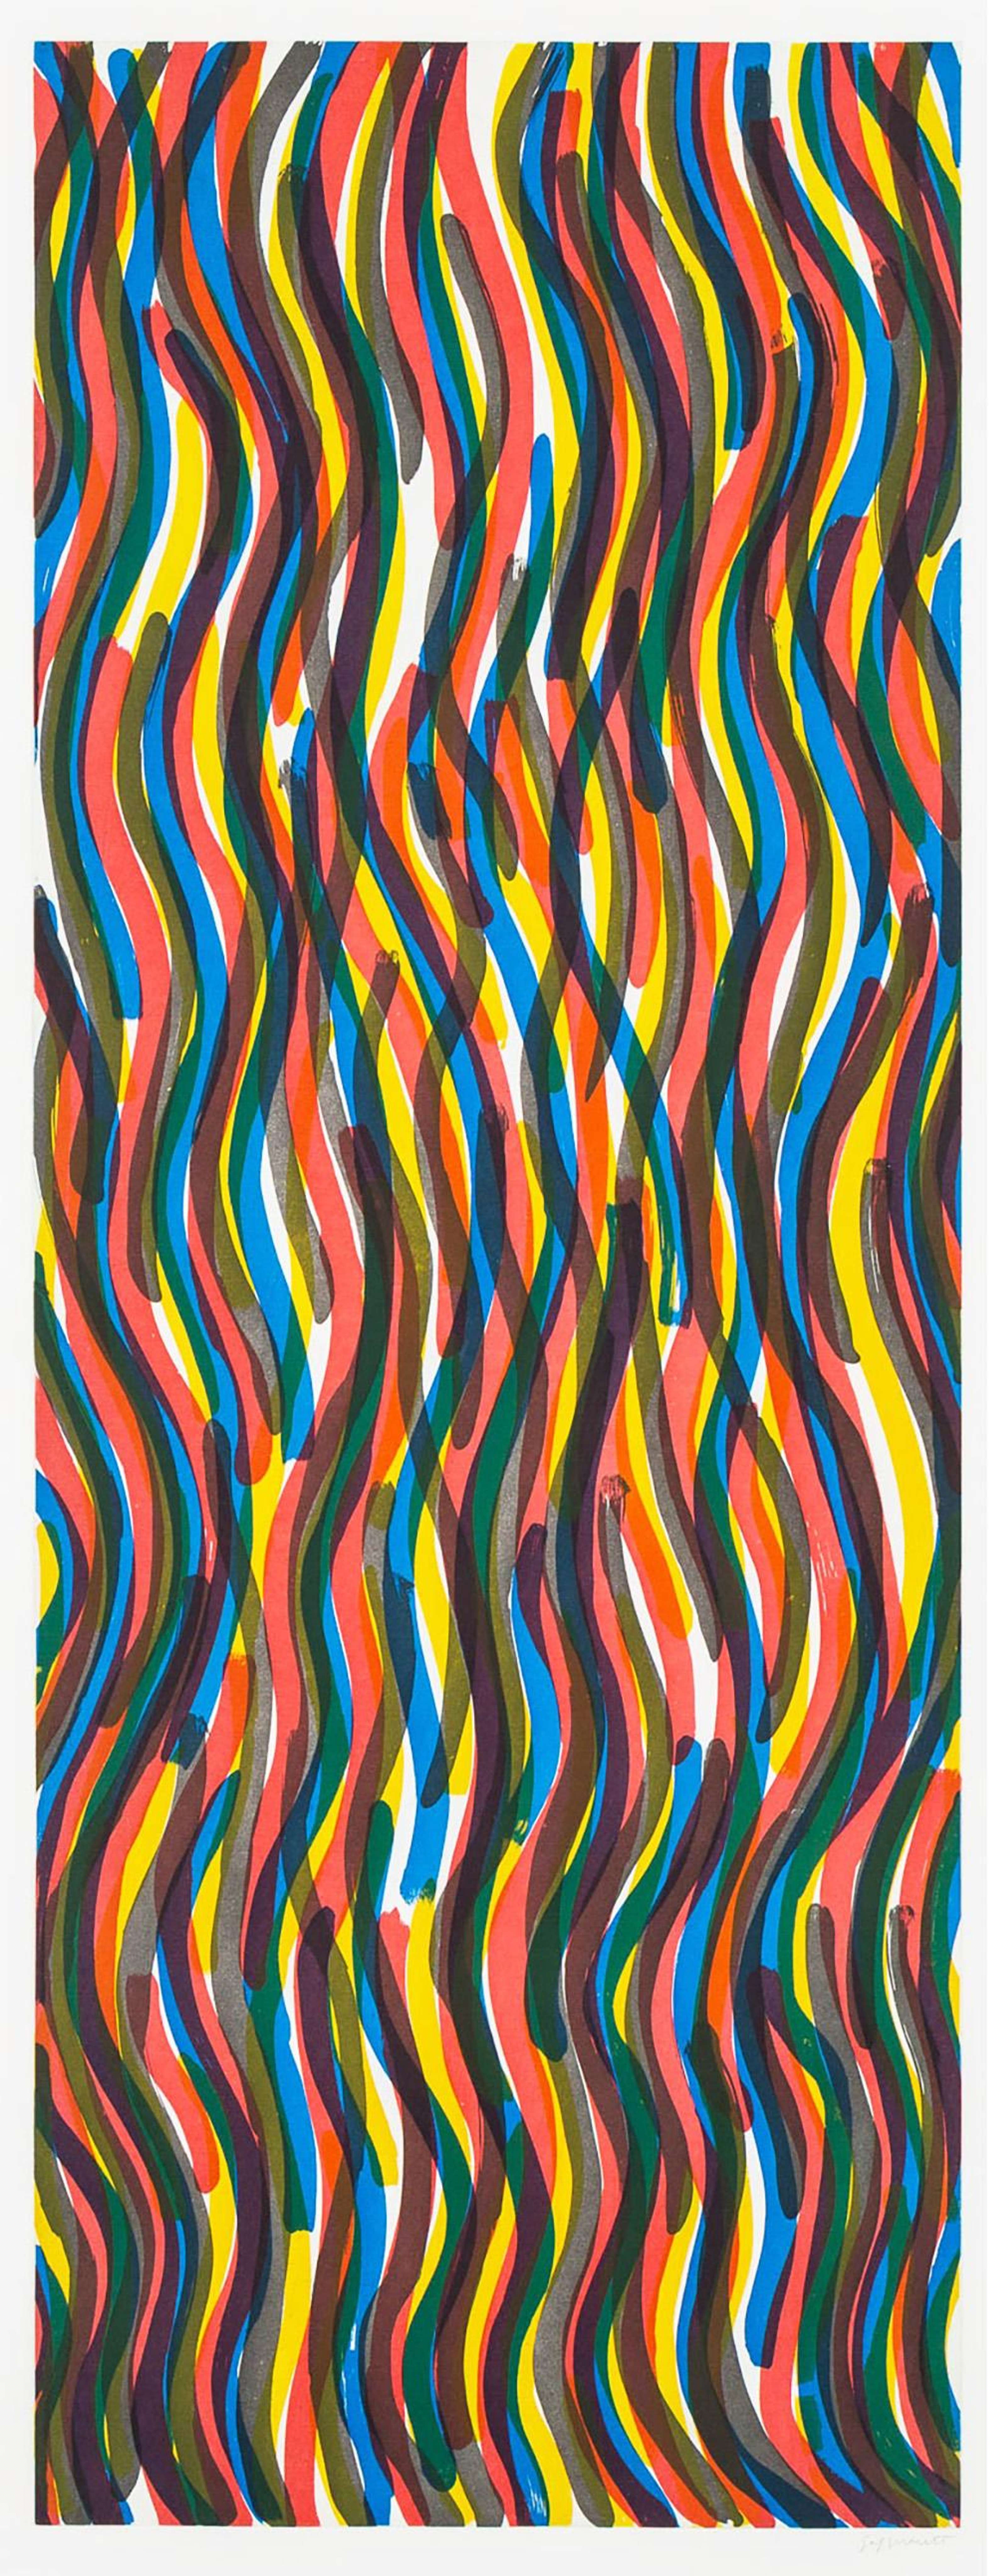 Curvy Brushstrokes II - Signed Print by Sol Lewitt 1997 - MyArtBroker